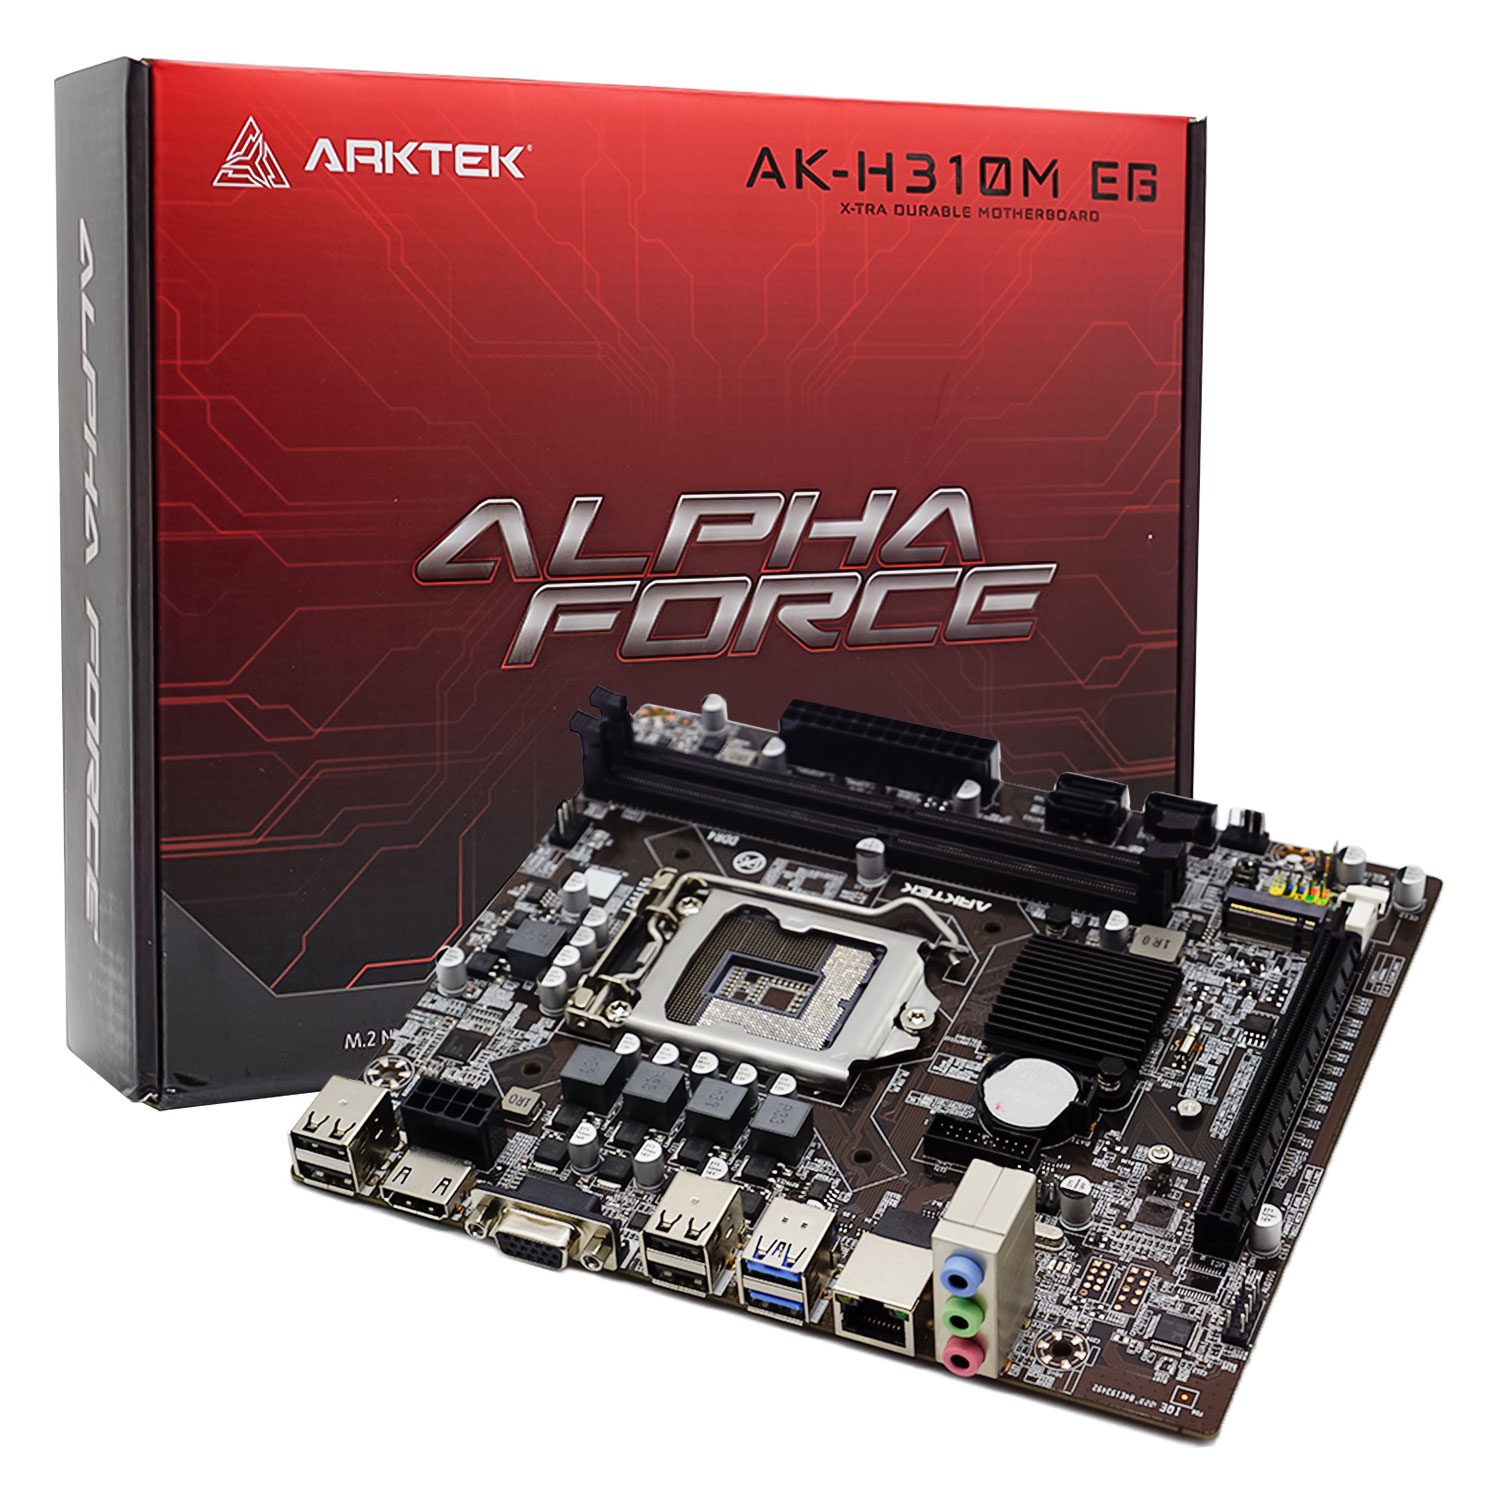 Placa Mãe Arktek AK-H310M EG DDR4 Socket LGA 1151 Chipset Intel H310 Micro ATX